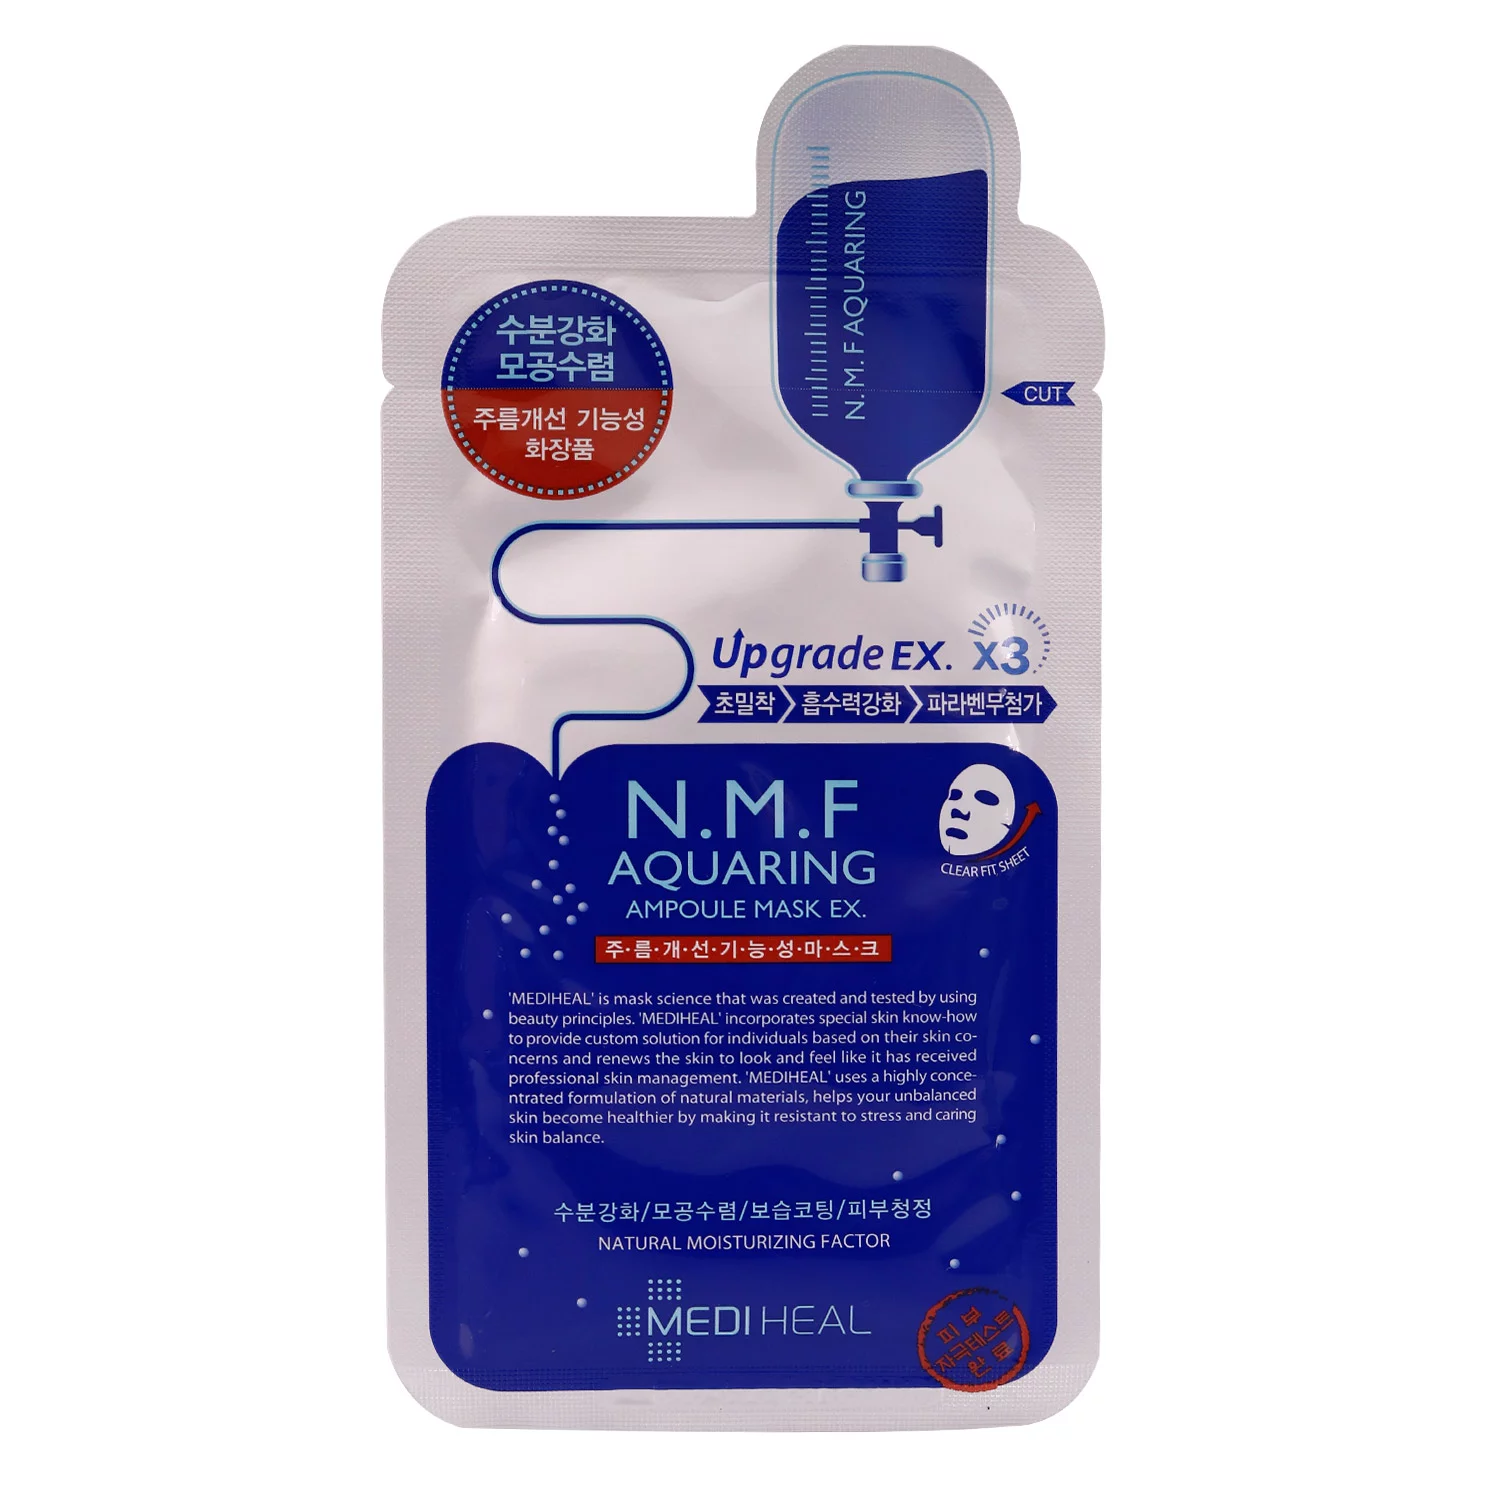 N.M.F Aquaring Ampoule Mask EX в интернет-магазине Skinly